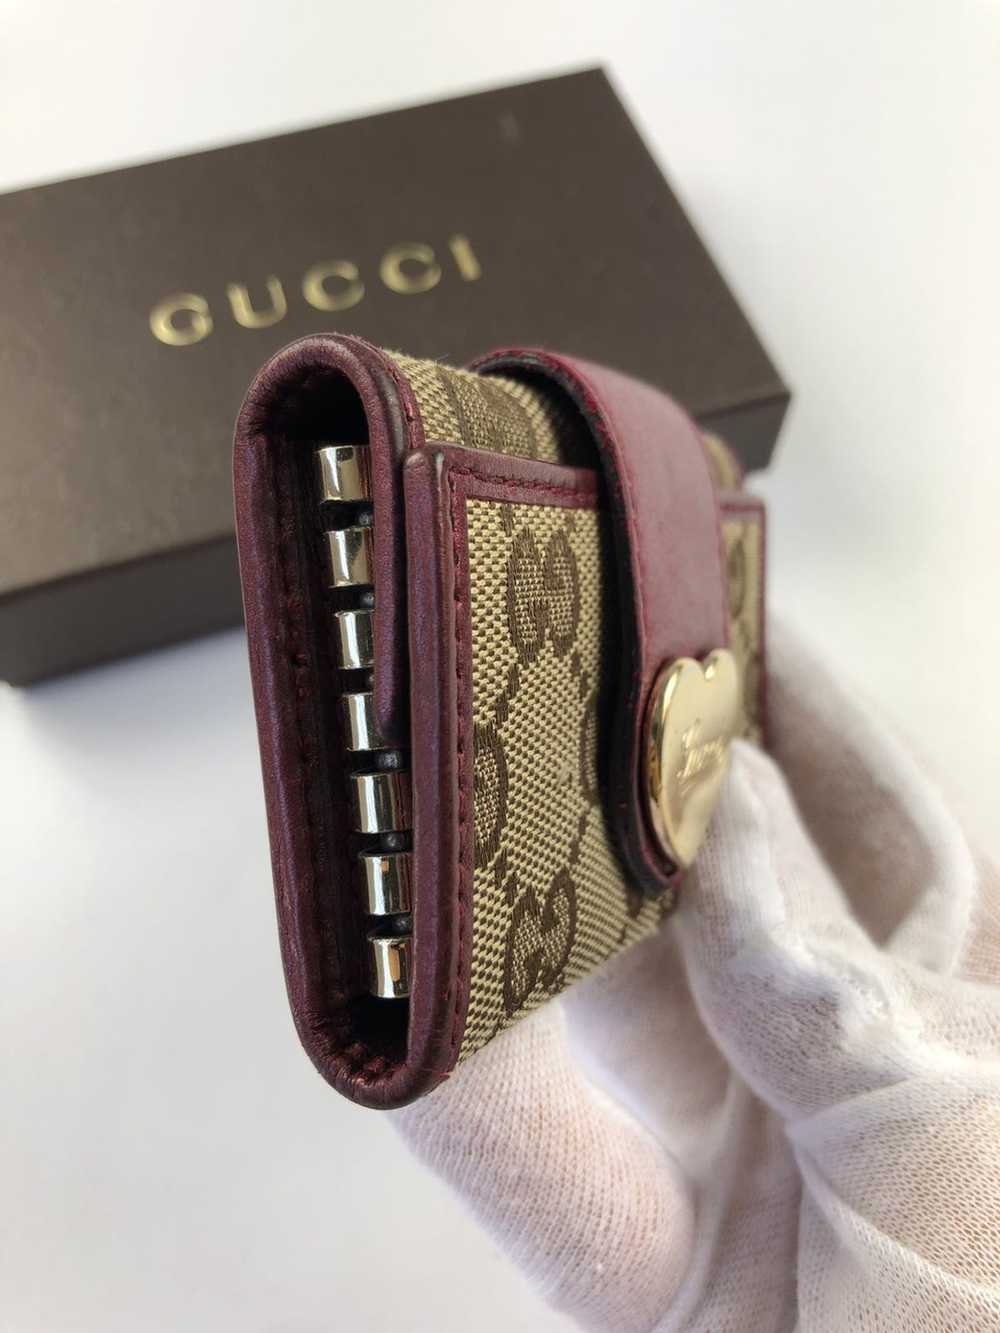 Gucci Gucci gg canvas monogram key holder - image 4